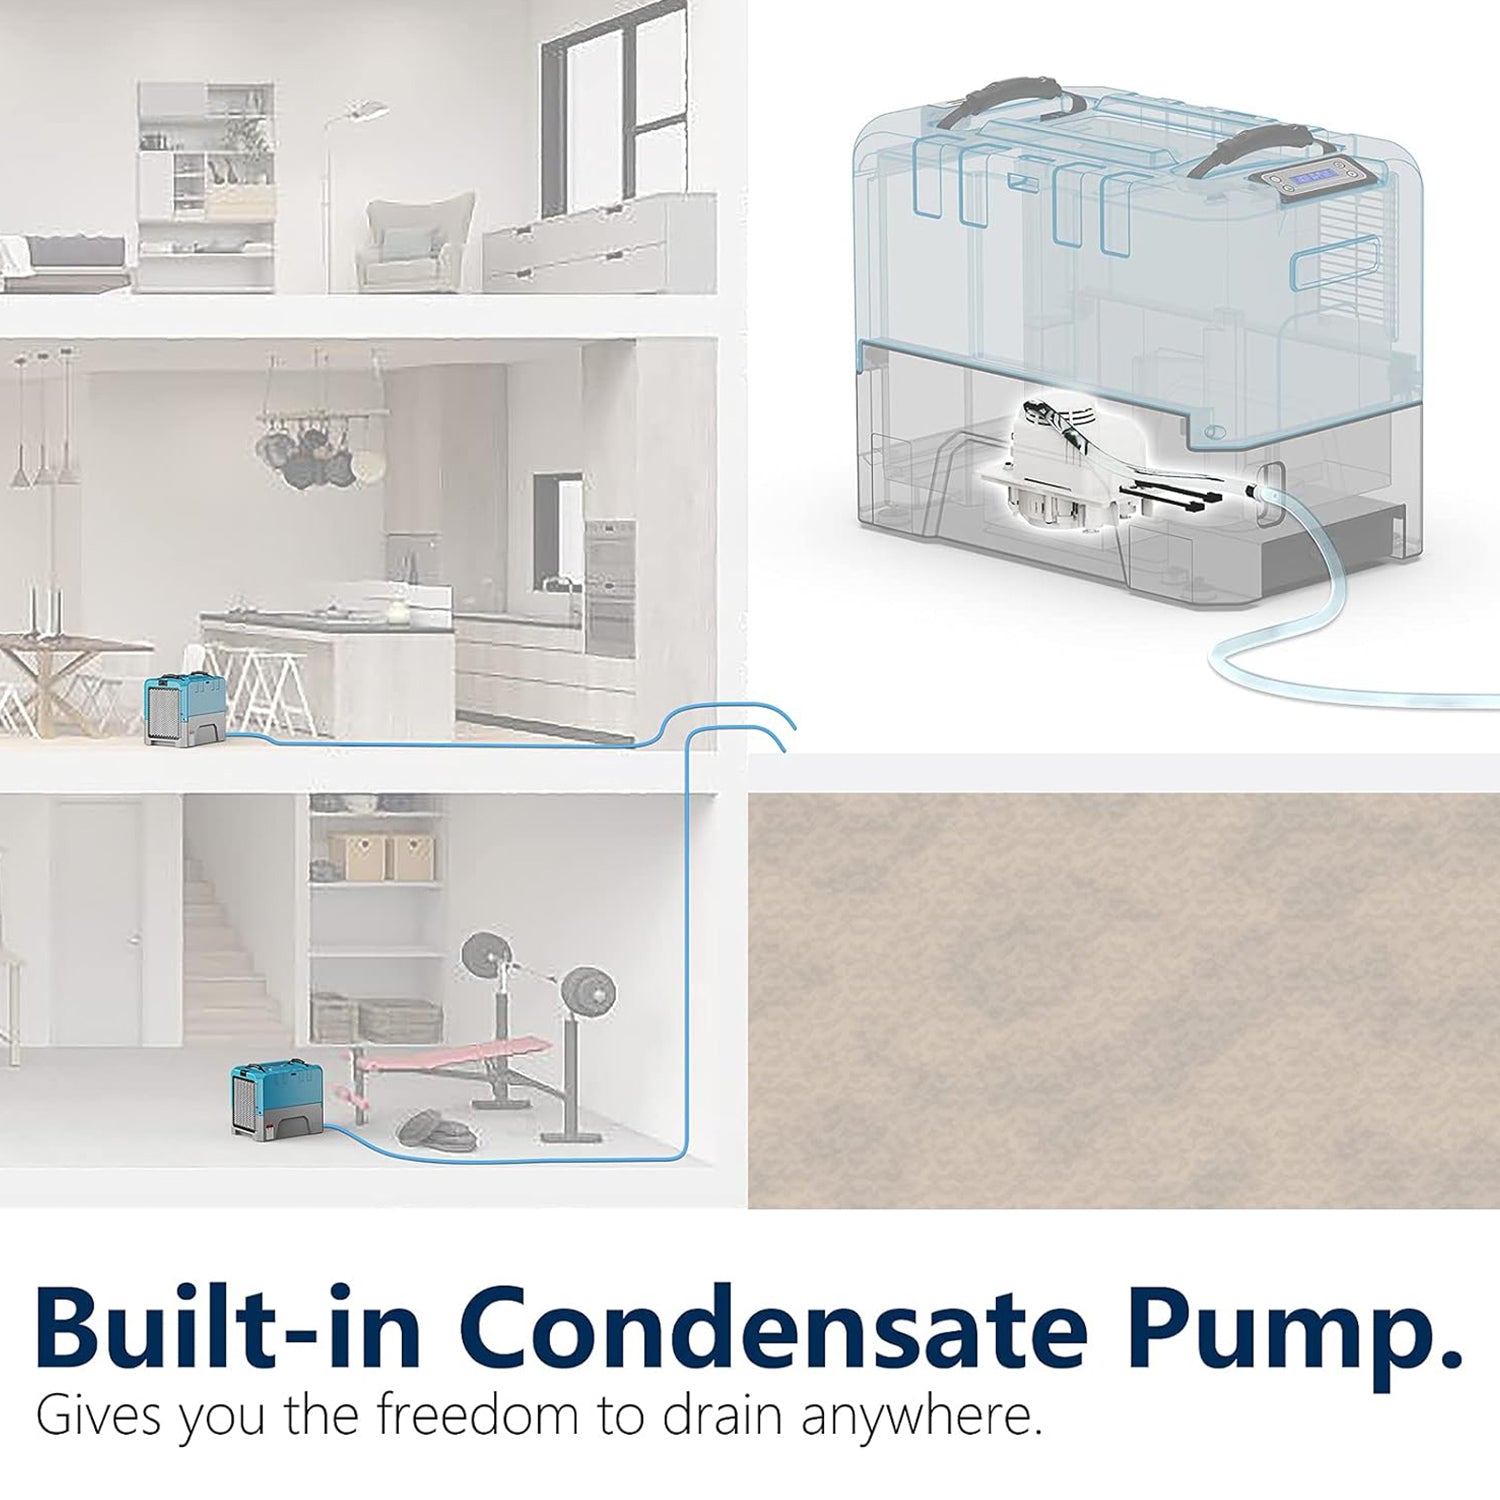 Built-in condensation pump